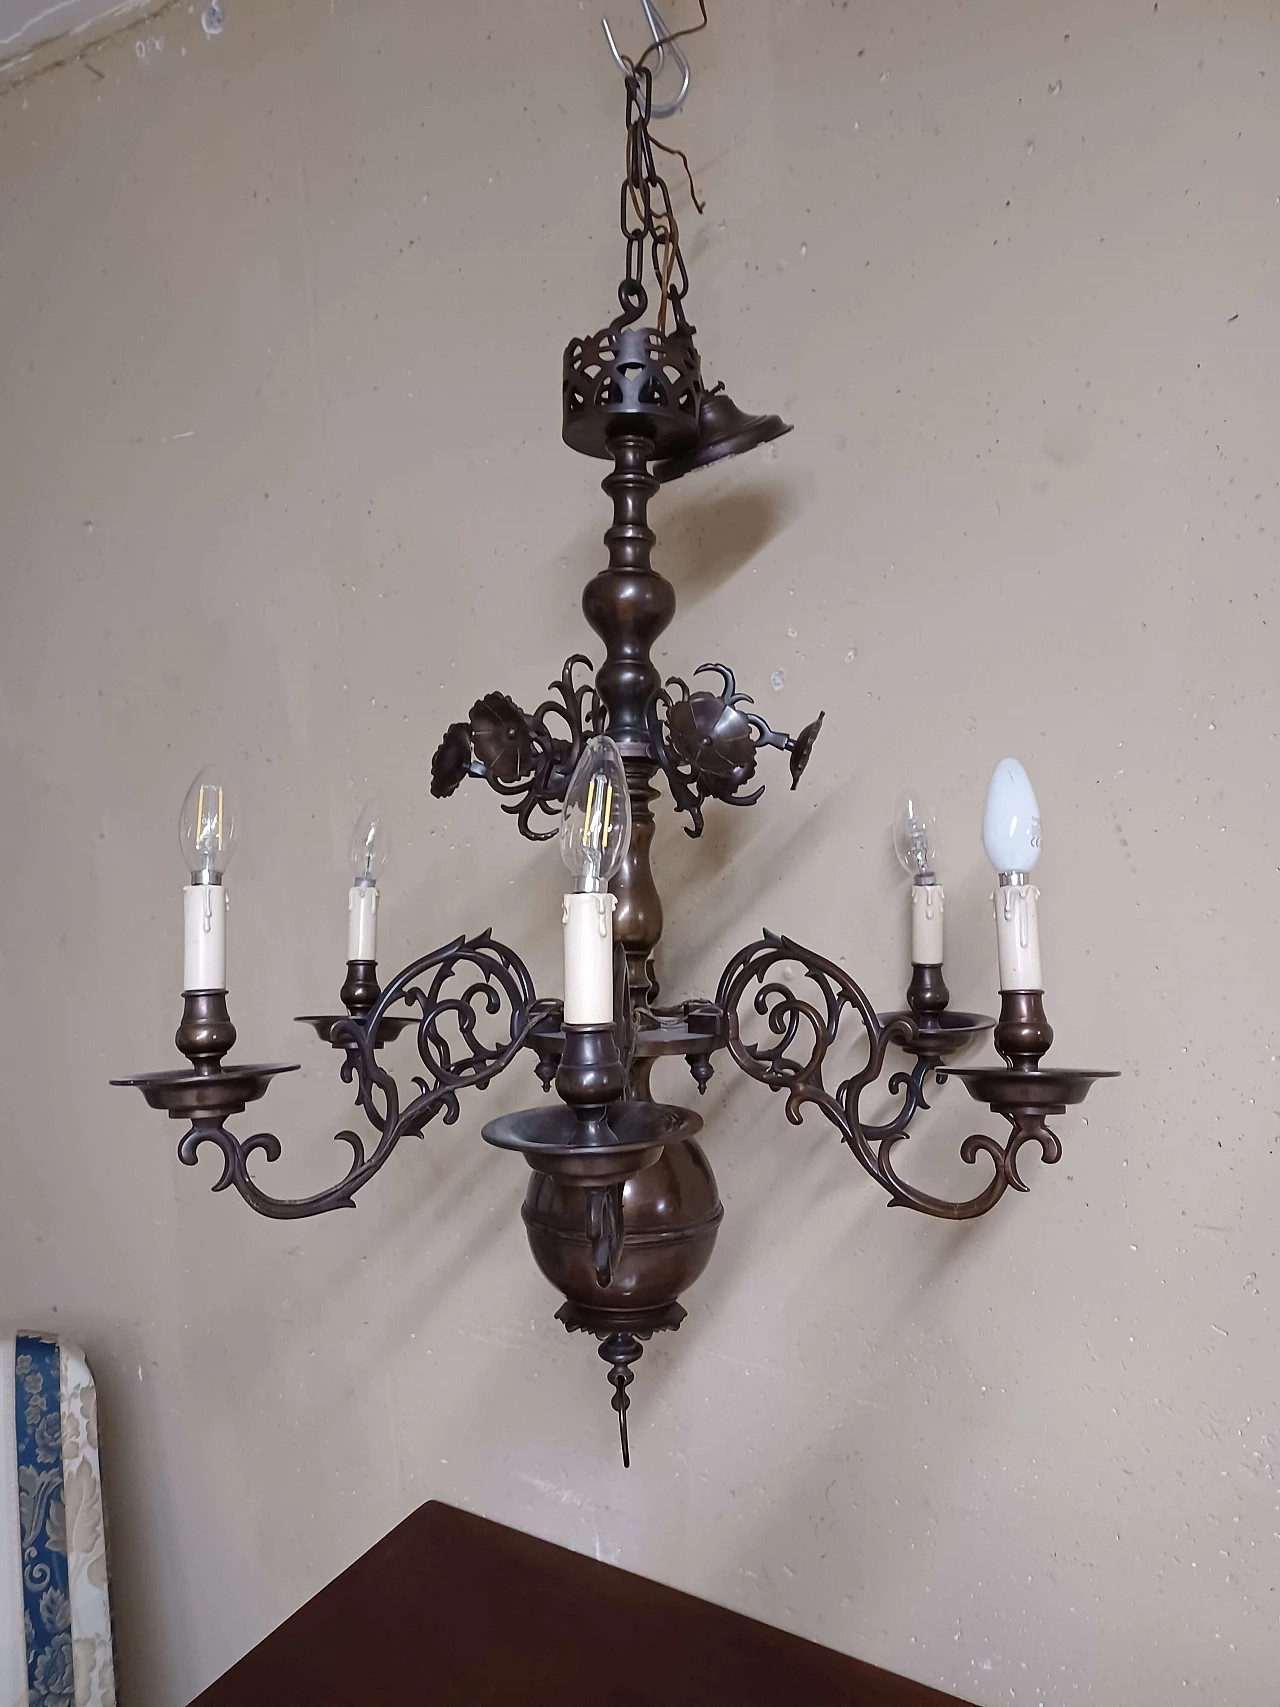 3 Bronze and brass chandeliers, 1950s 1343503